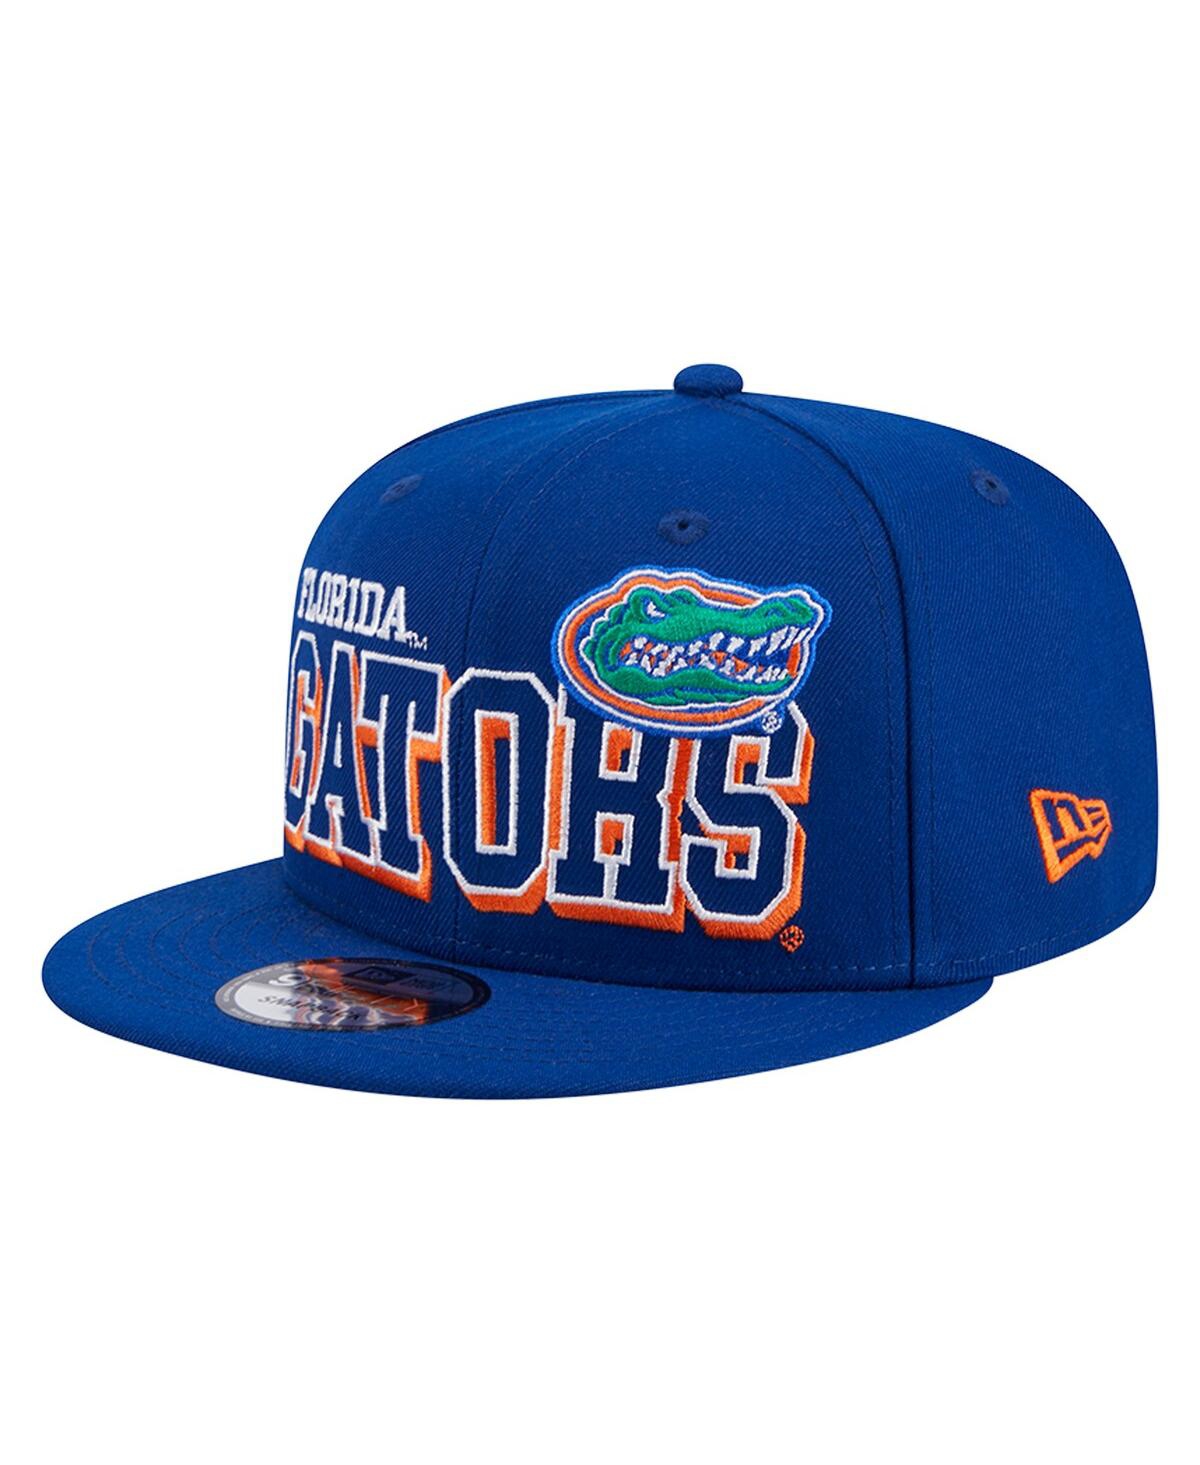 Shop New Era Men's Royal Florida Gators Game Day 9fifty Snapback Hat